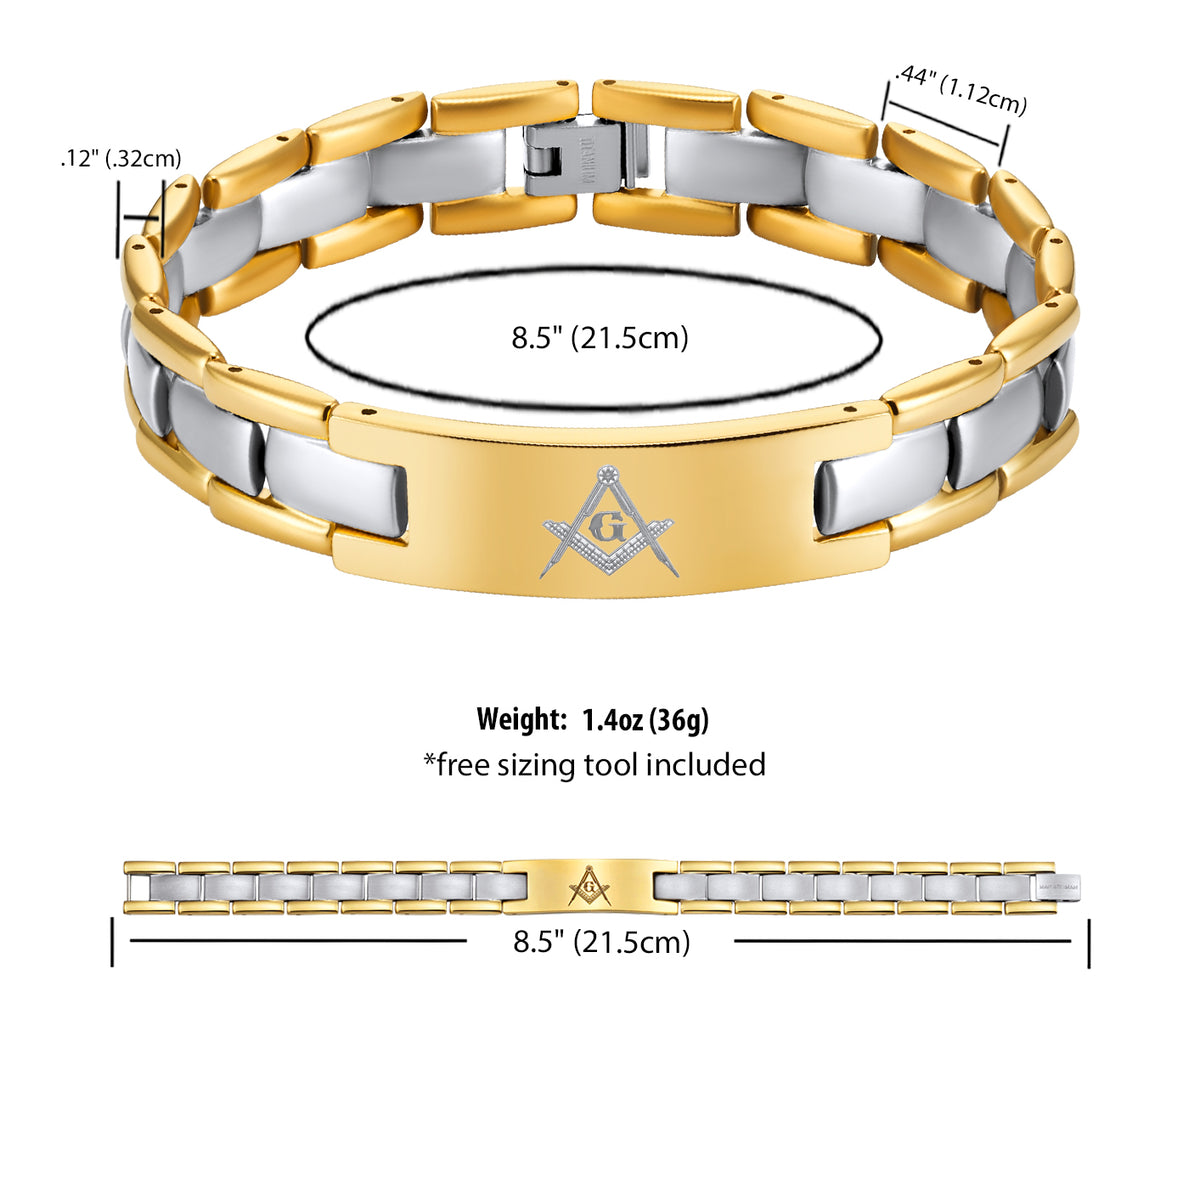 MasonicMan Two Tone Gold Titanium Bracelet with Square and Compass